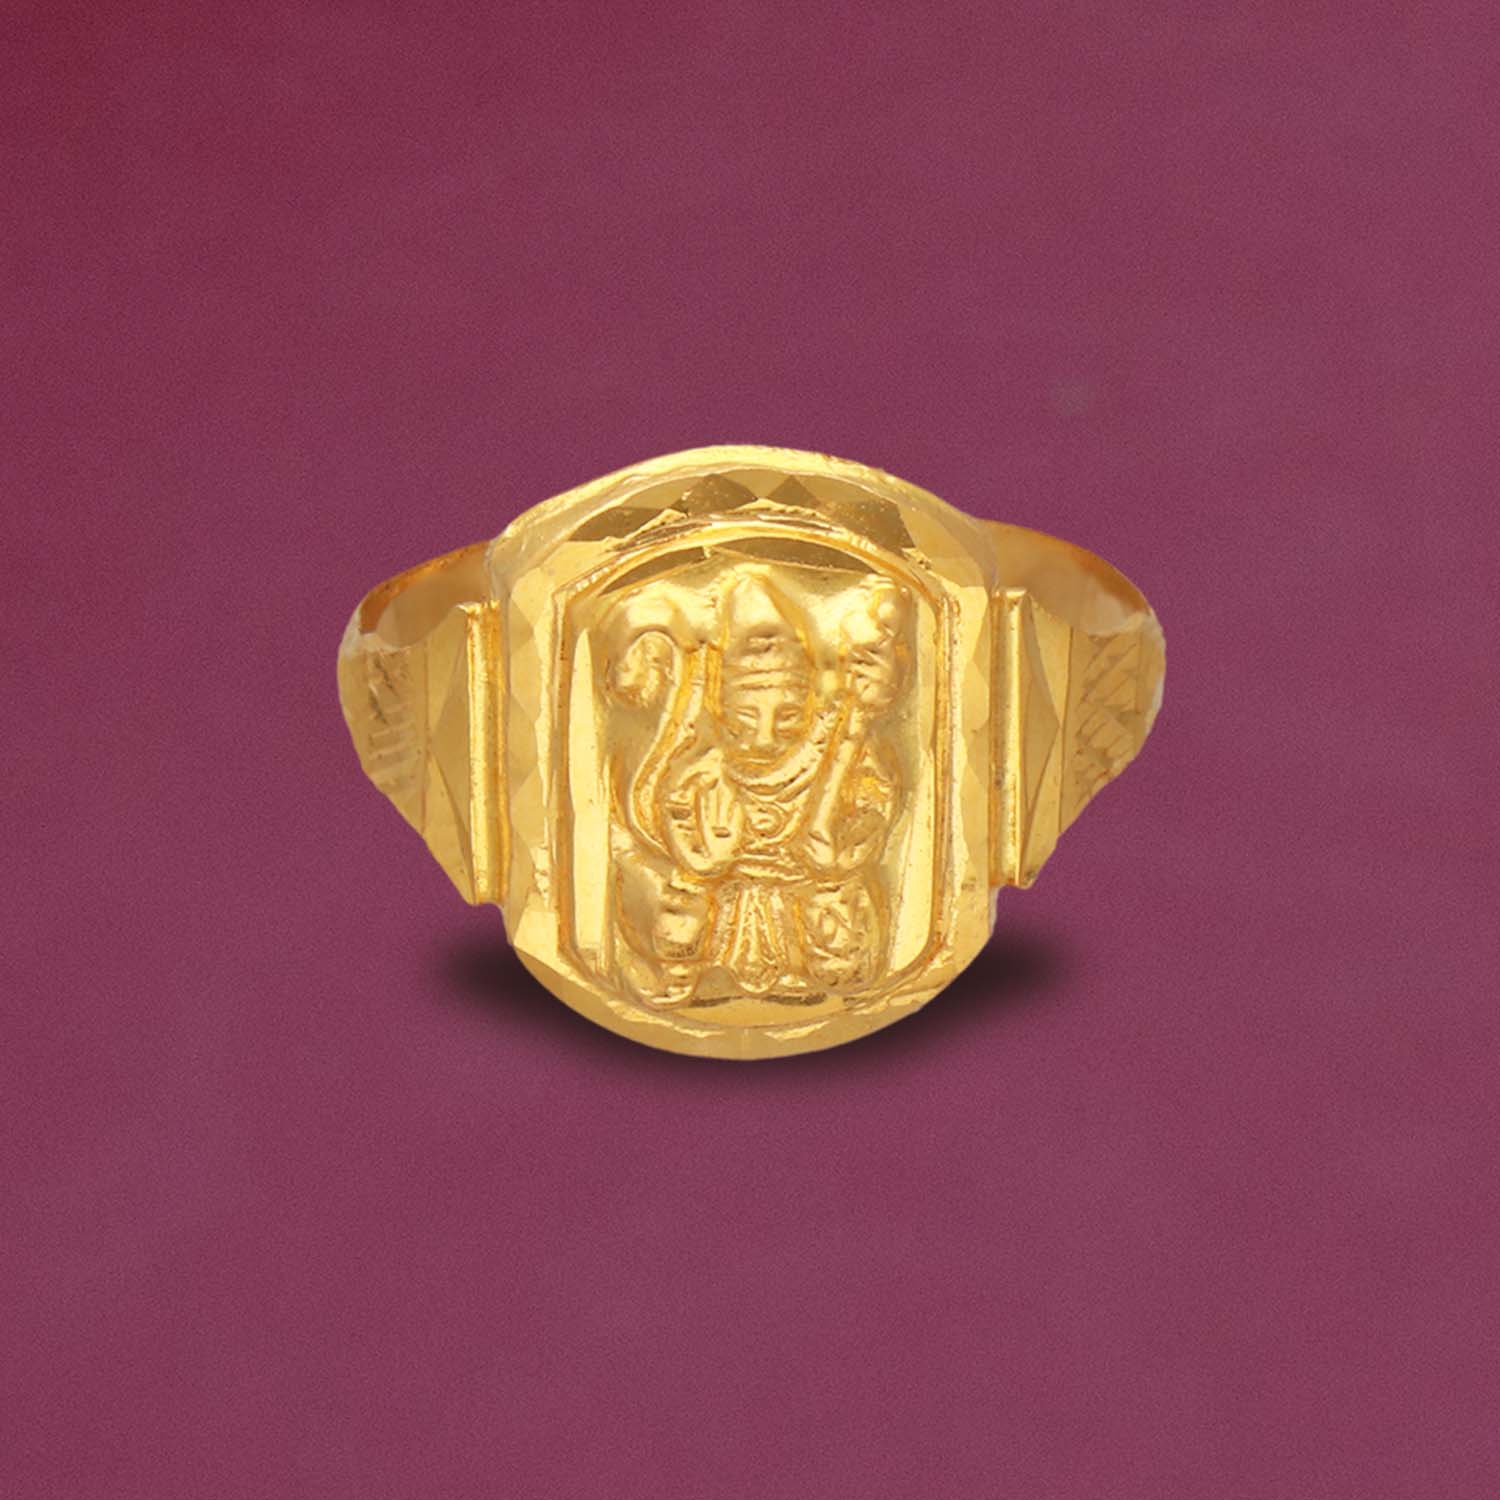 235-GR6590 - 22K Gold 'Hanumanji' Ring with Cz For Men | Mens gold rings,  Gold, 22k gold ring